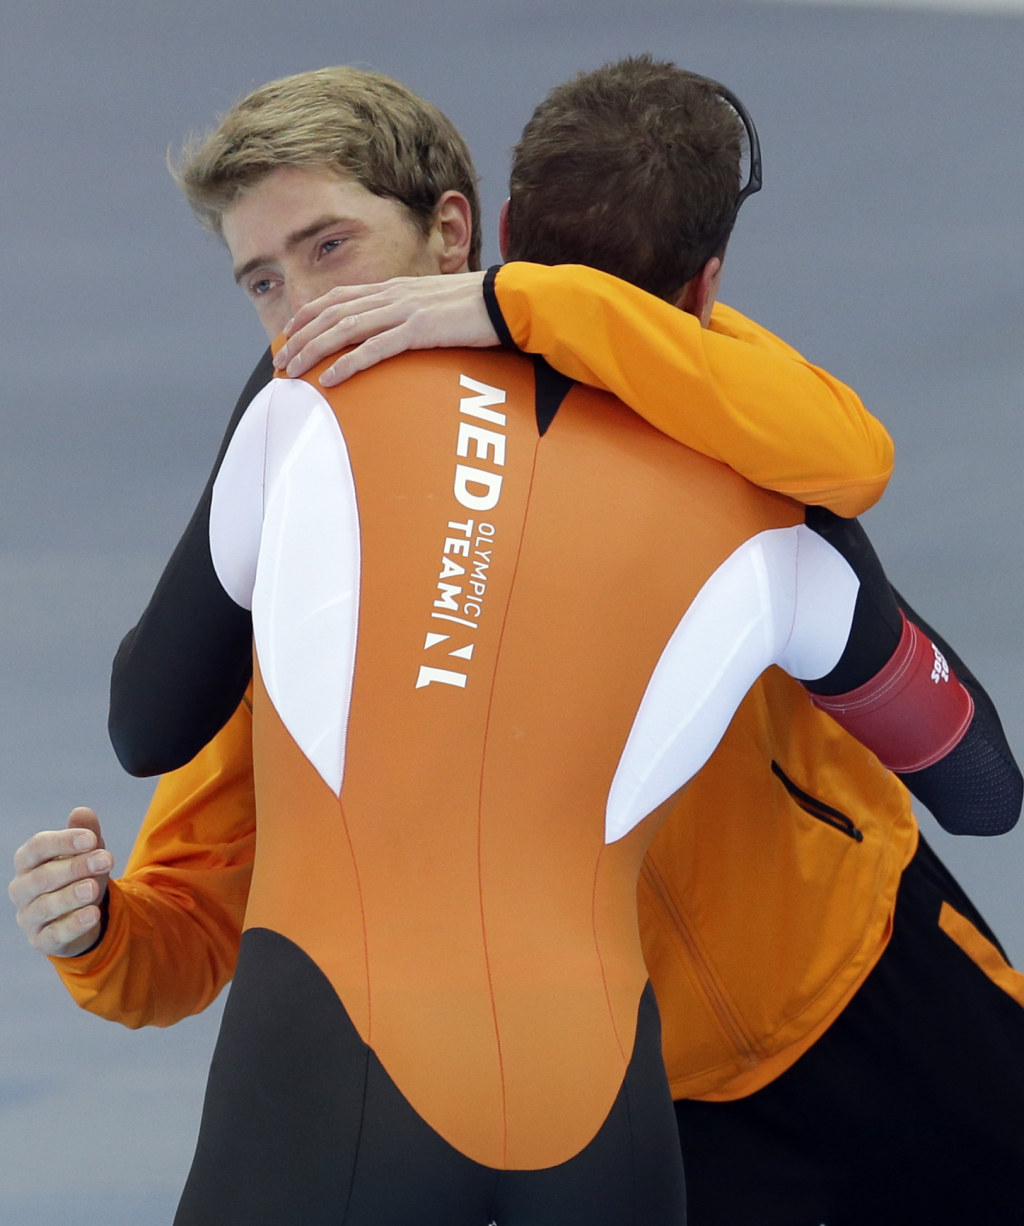 Gold medallist Jorrit Bergsma, facing camera, is hugged by teammate фото (photo)